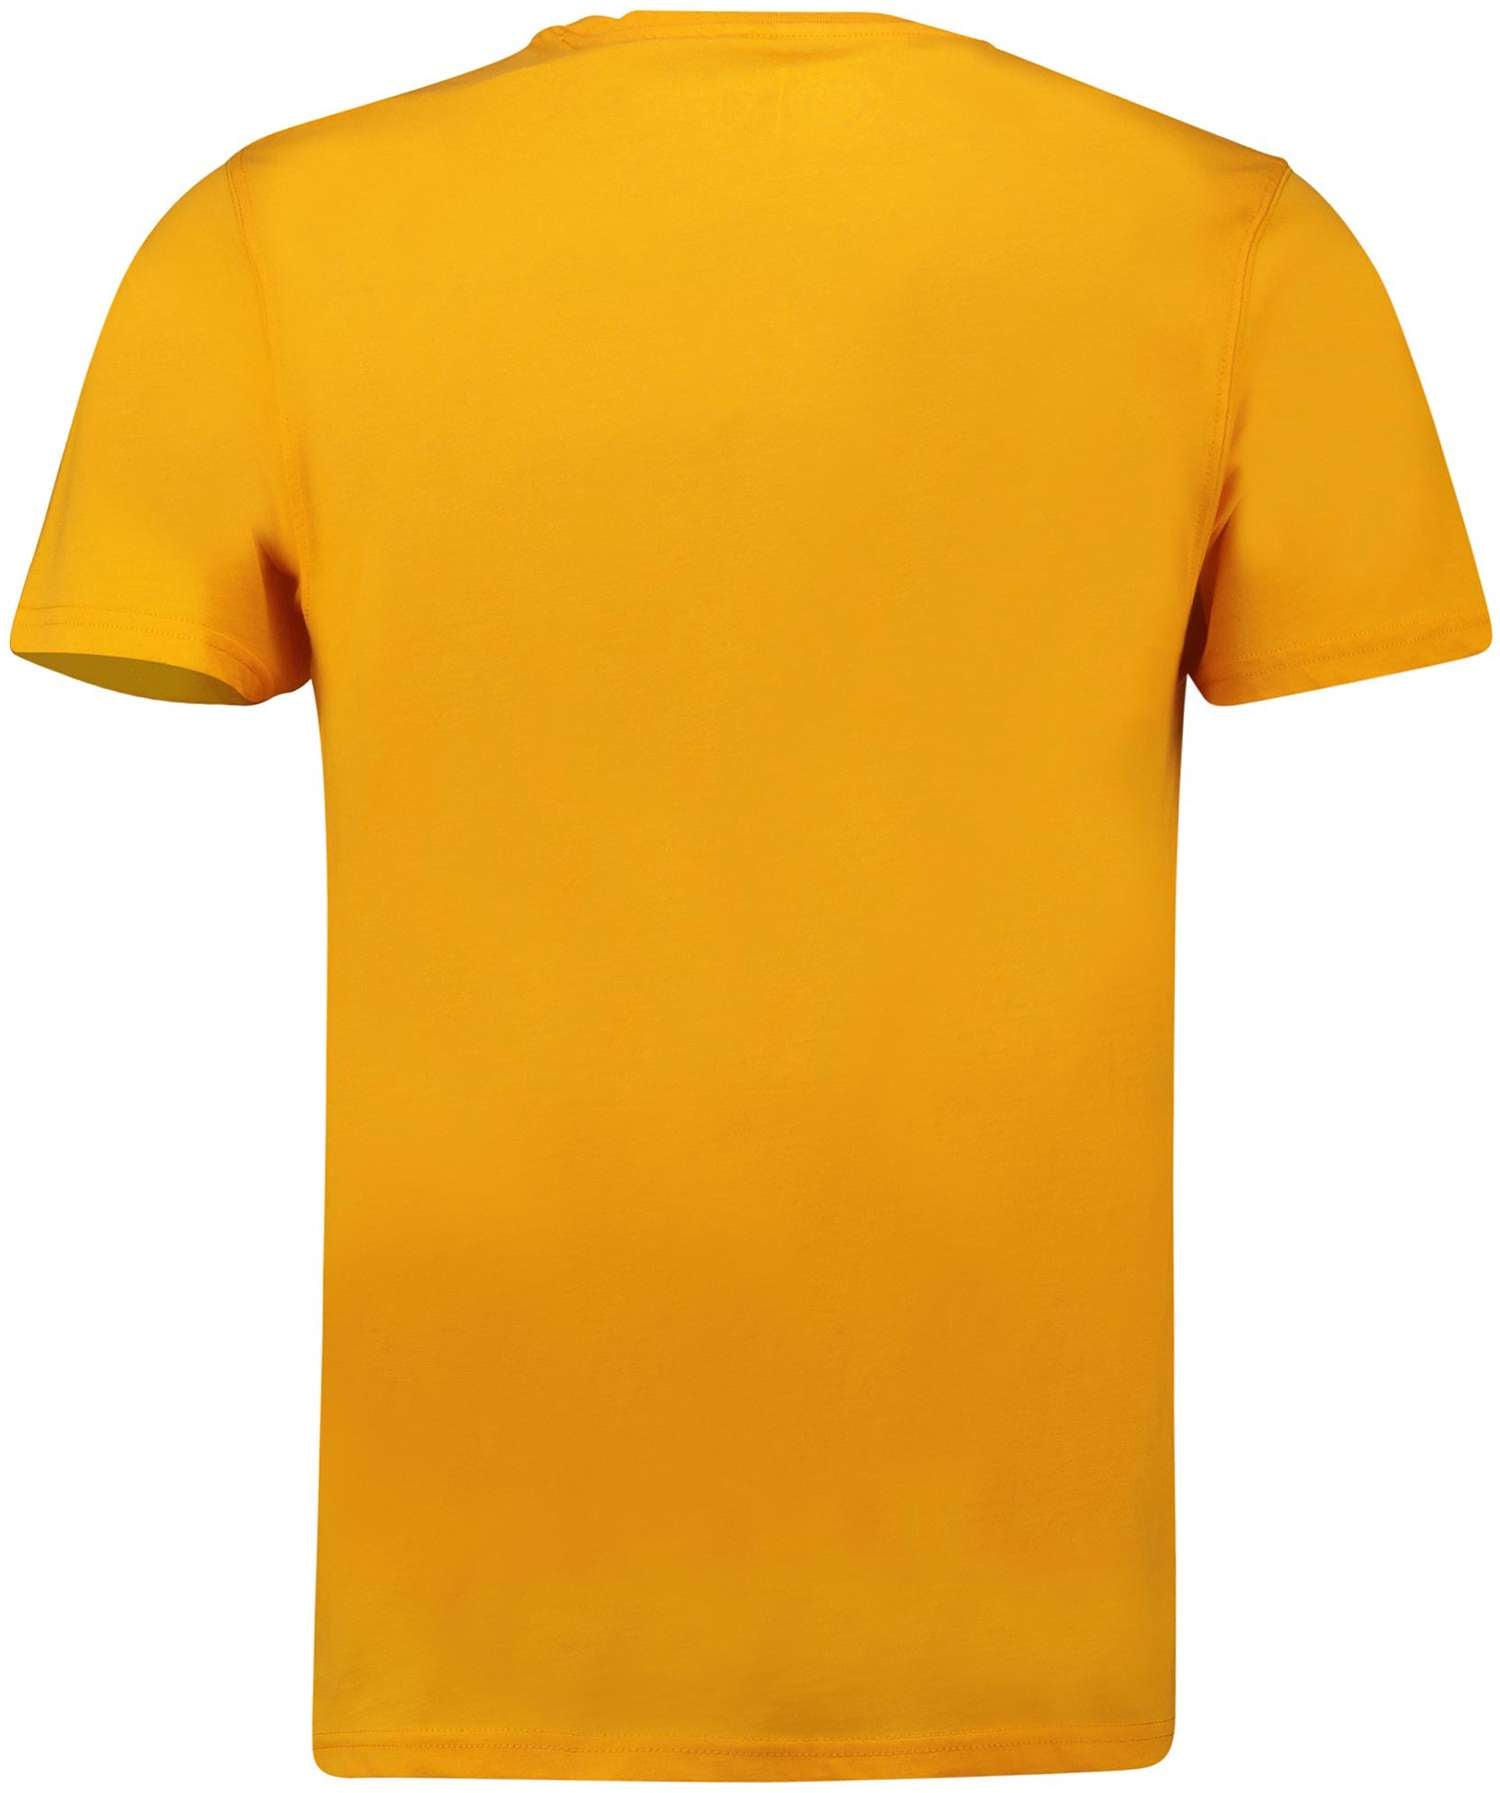 Fanatics - NHL Pittsburgh Penguins Secondary Core Graphic T-Shirt - Gelb